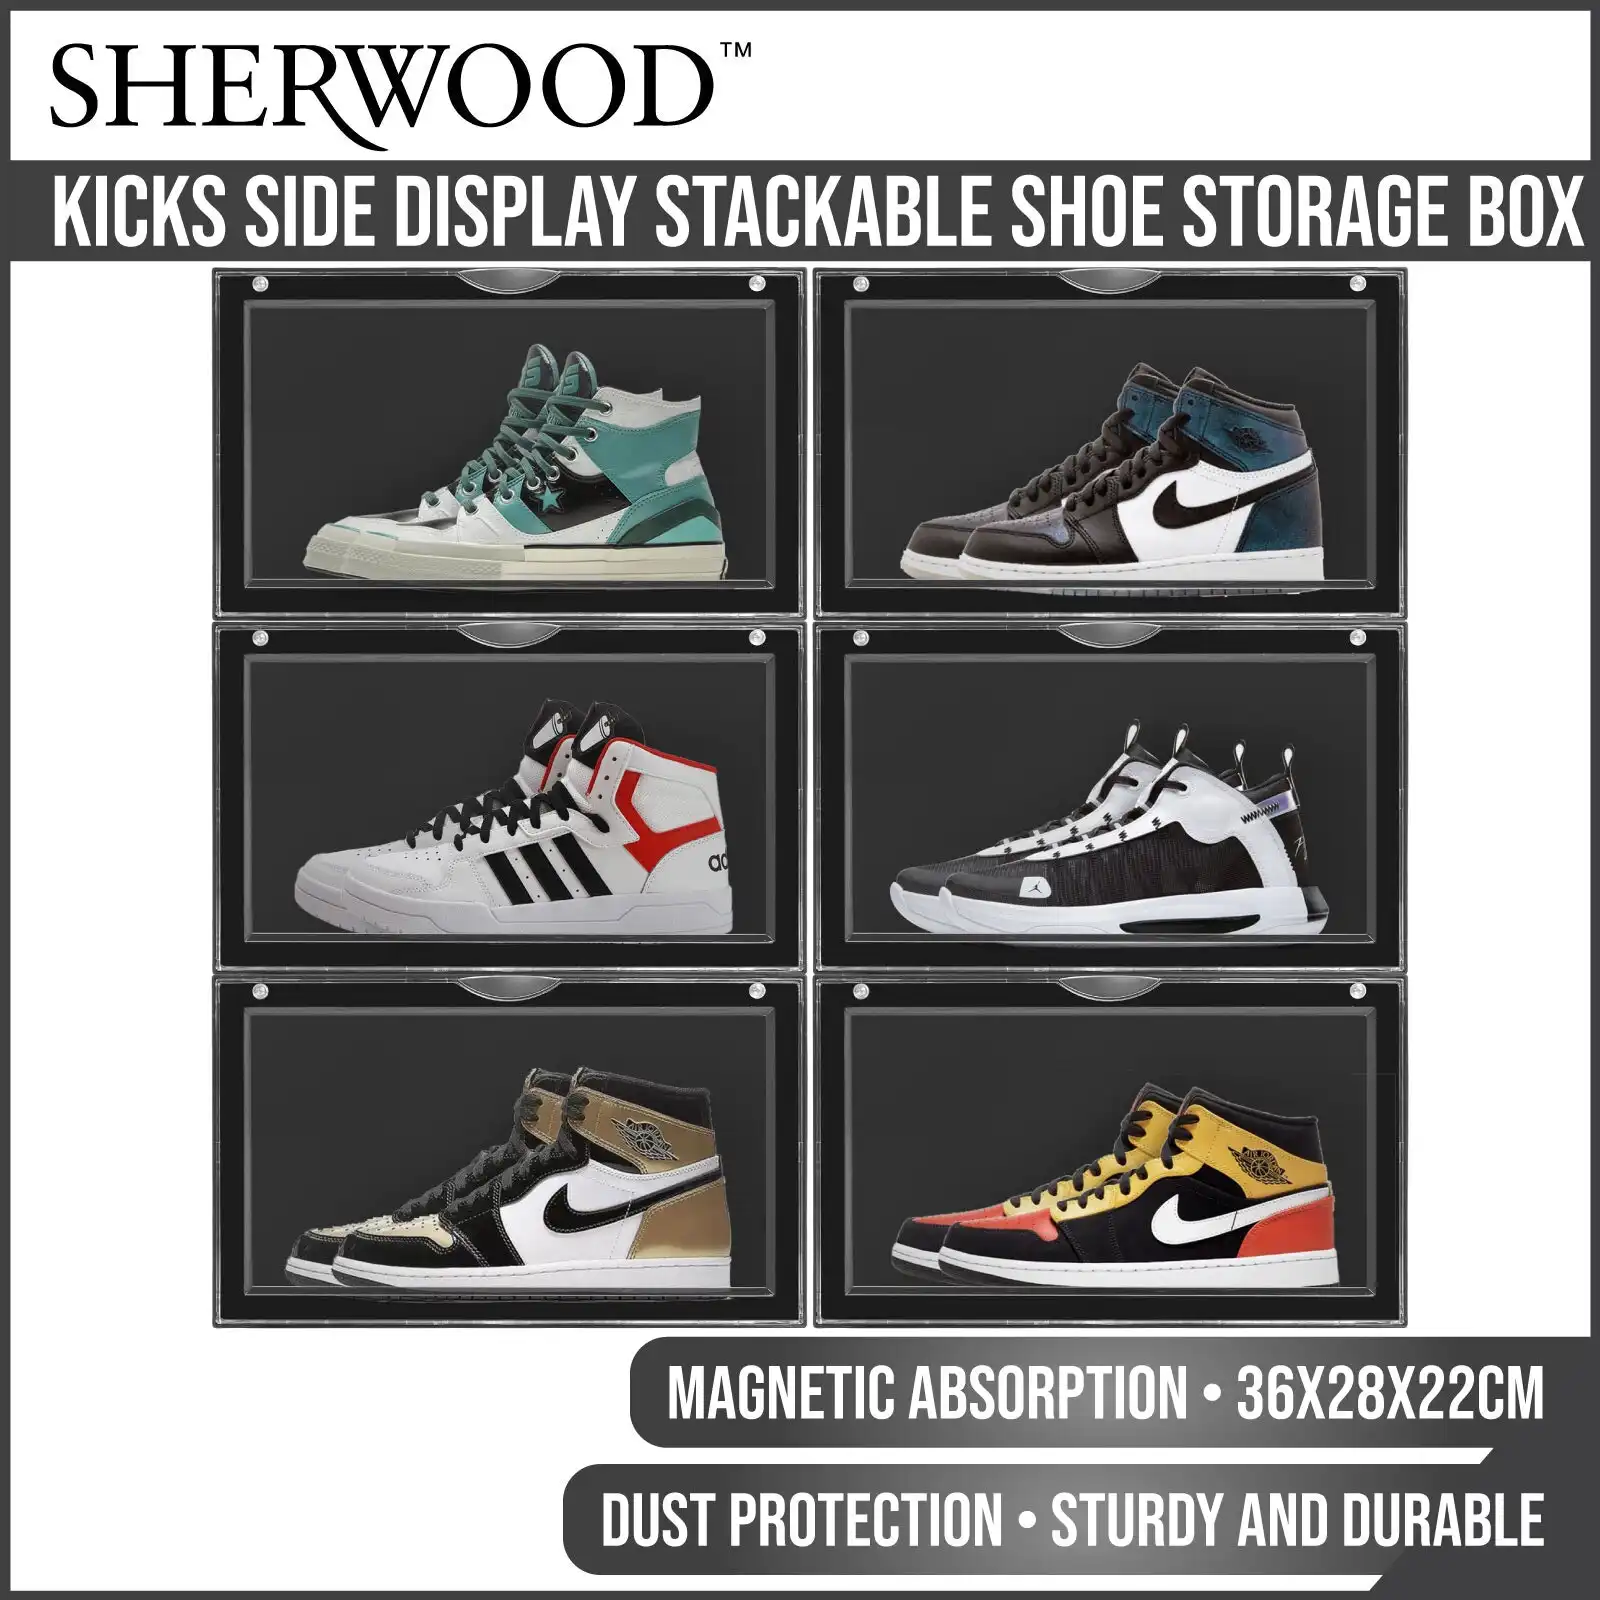 Sherwood Home Kicks Side Display Stackable Shoe Storage Box Black 36X28X22Cm